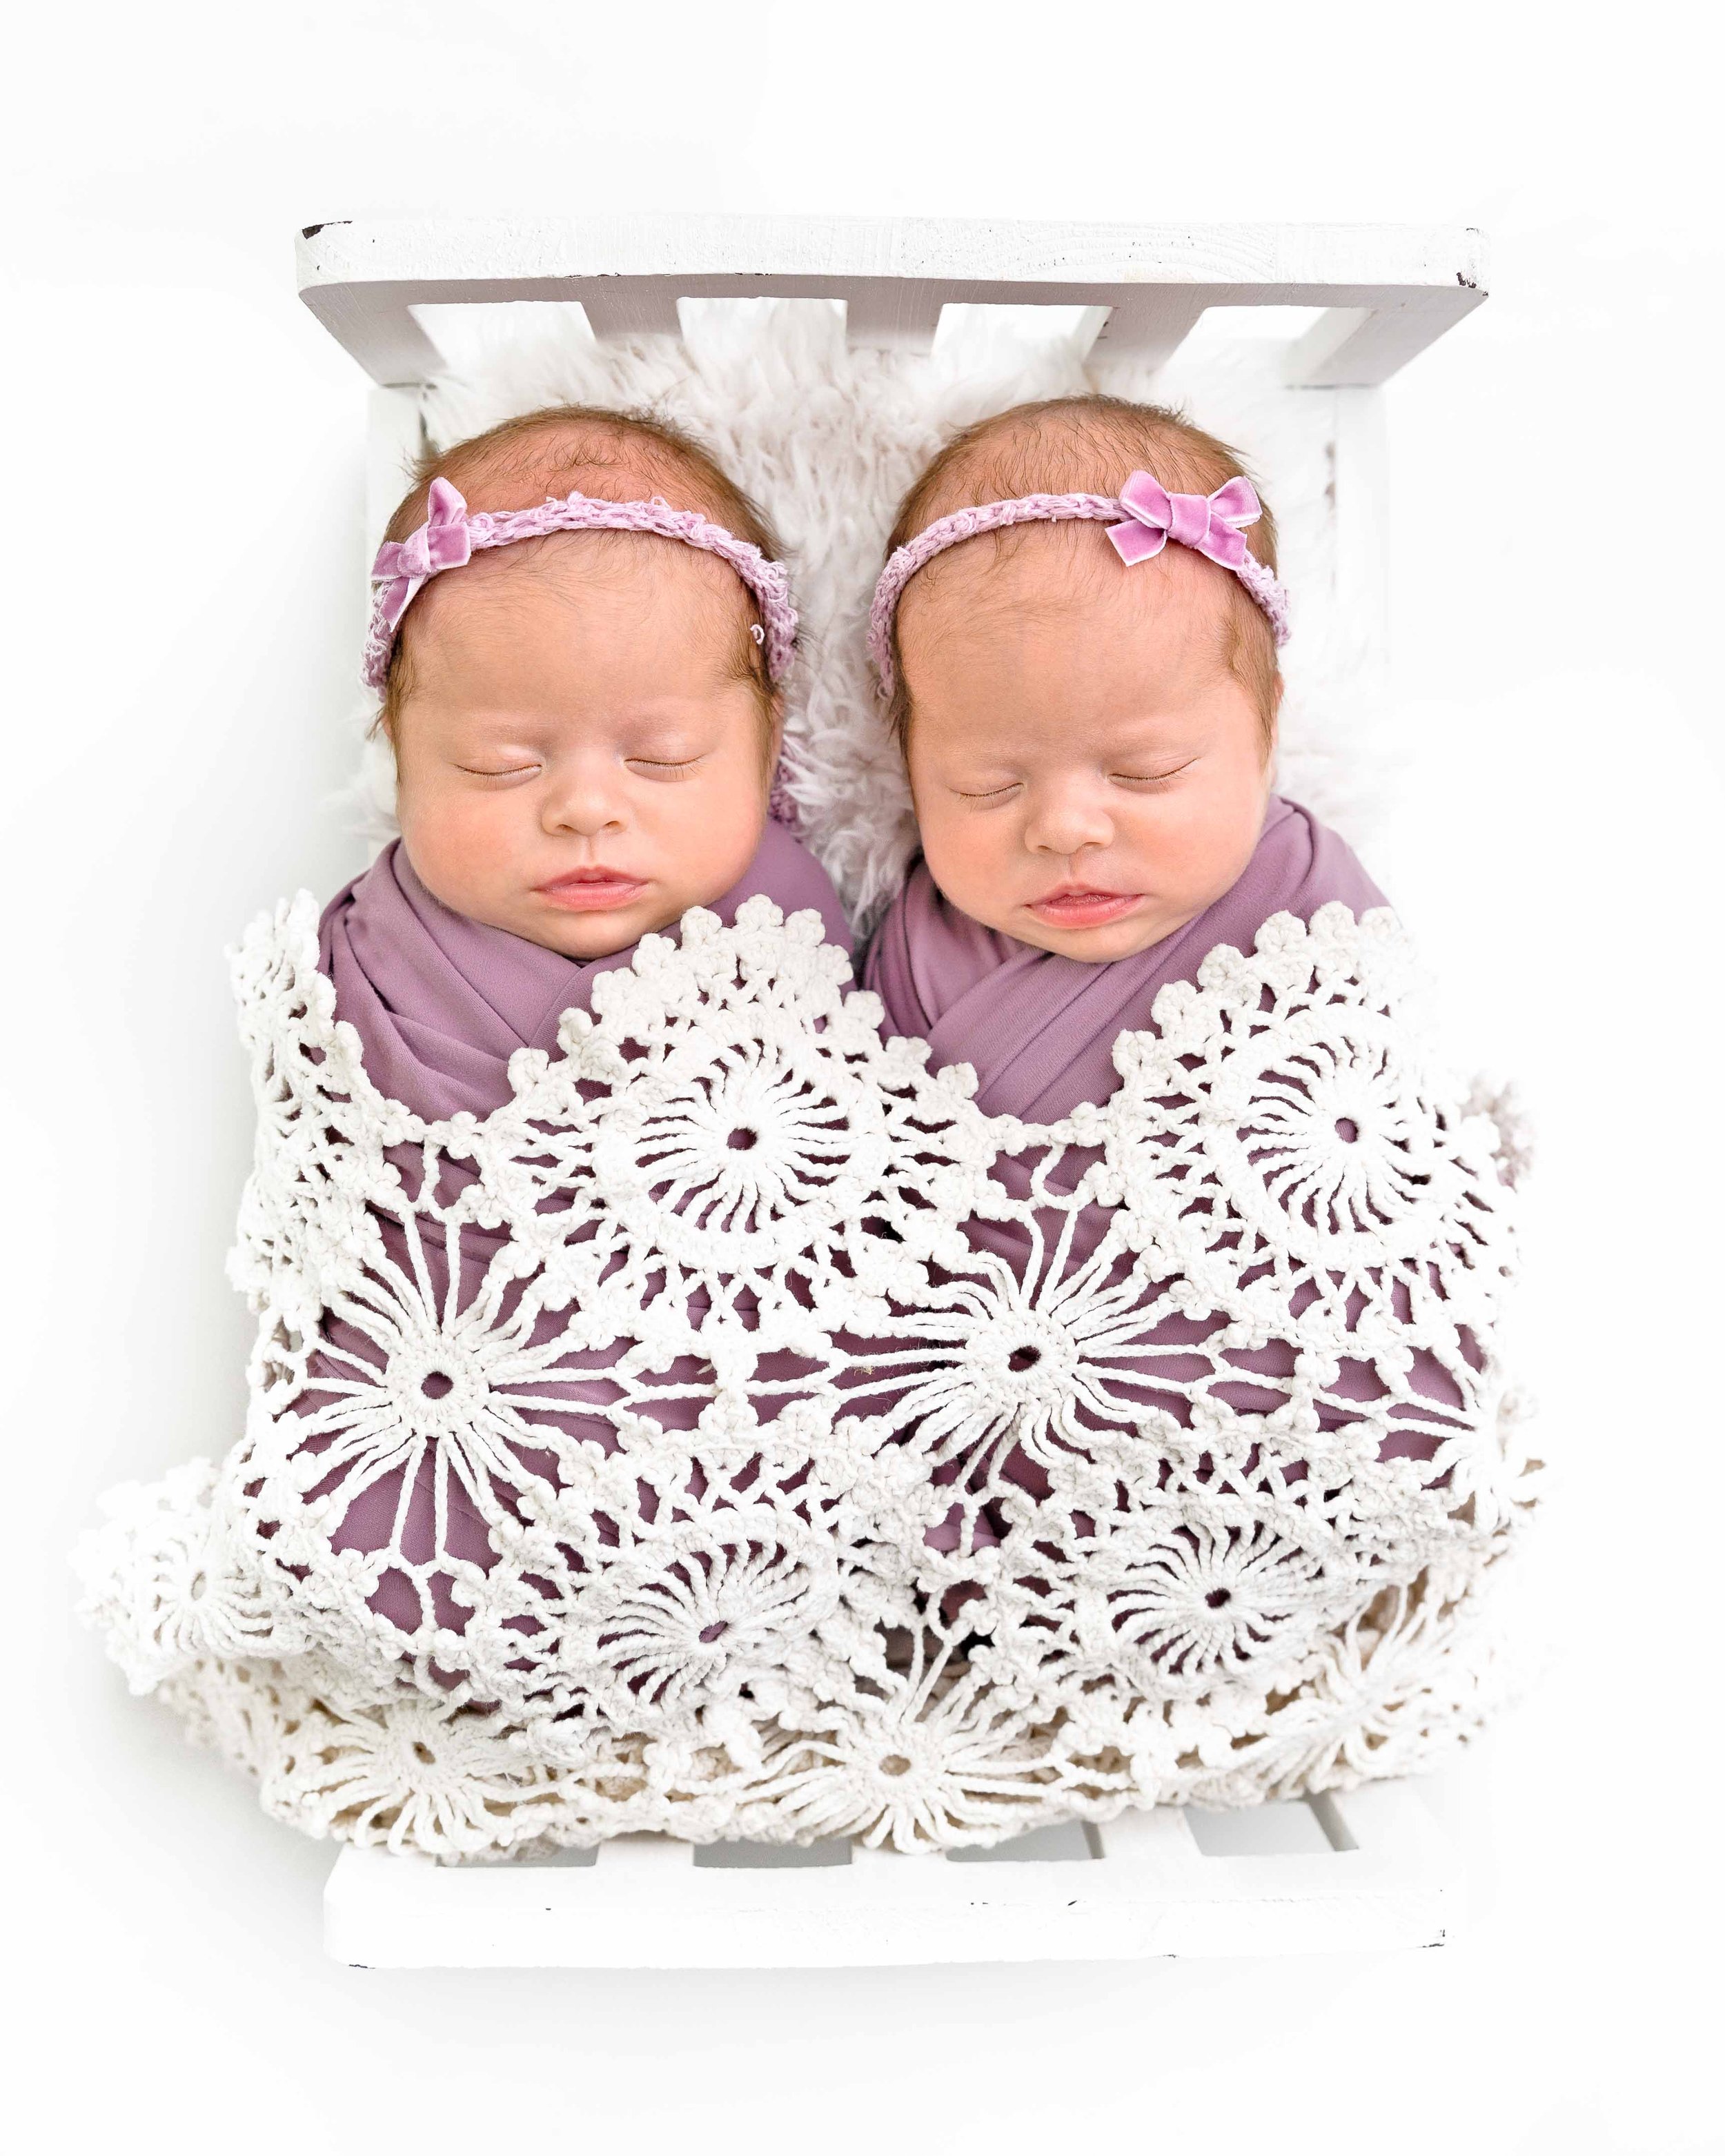 Twin-baby-newborn-photos-family-photography-spokane-washington-5.jpg